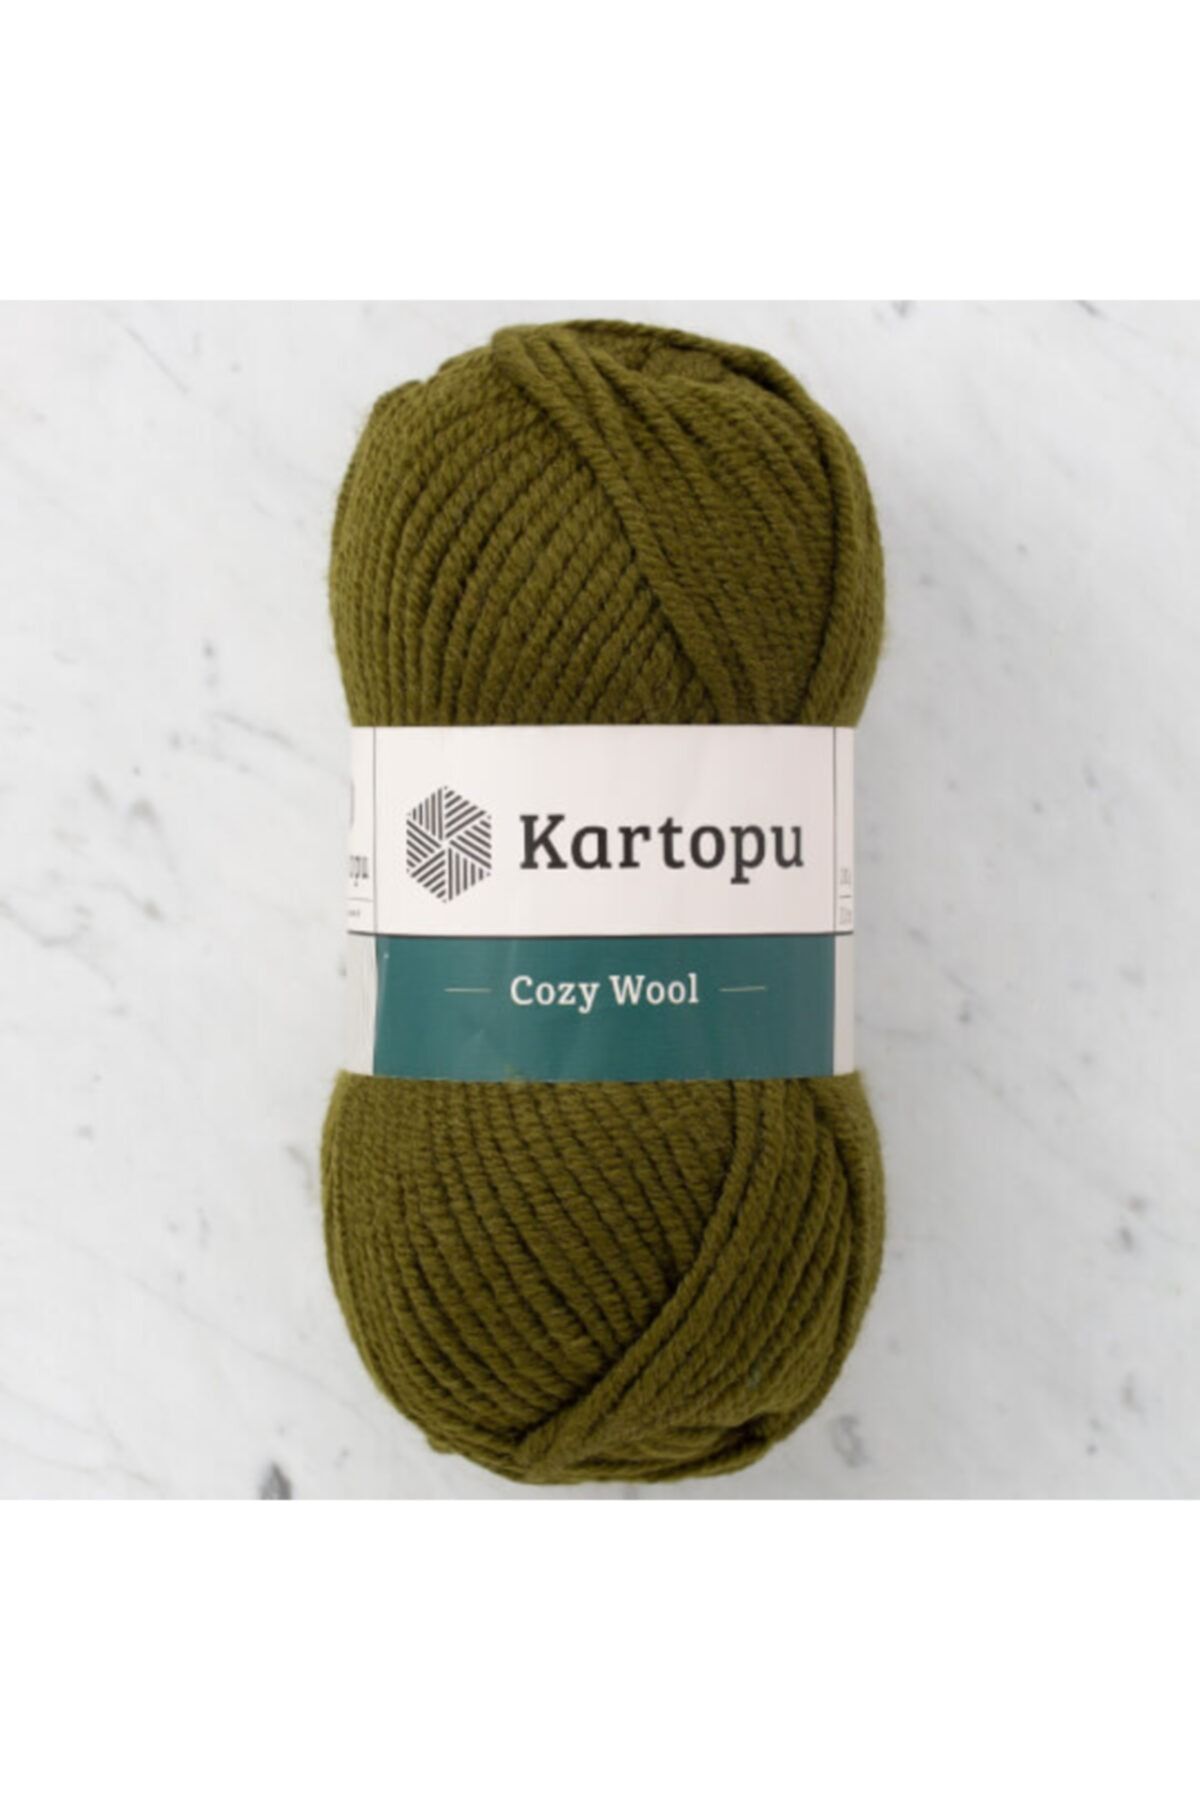 Kartopu Cozy Wool K410 Haki Yeşil %25 Yün Karışımlı Kalın Ip